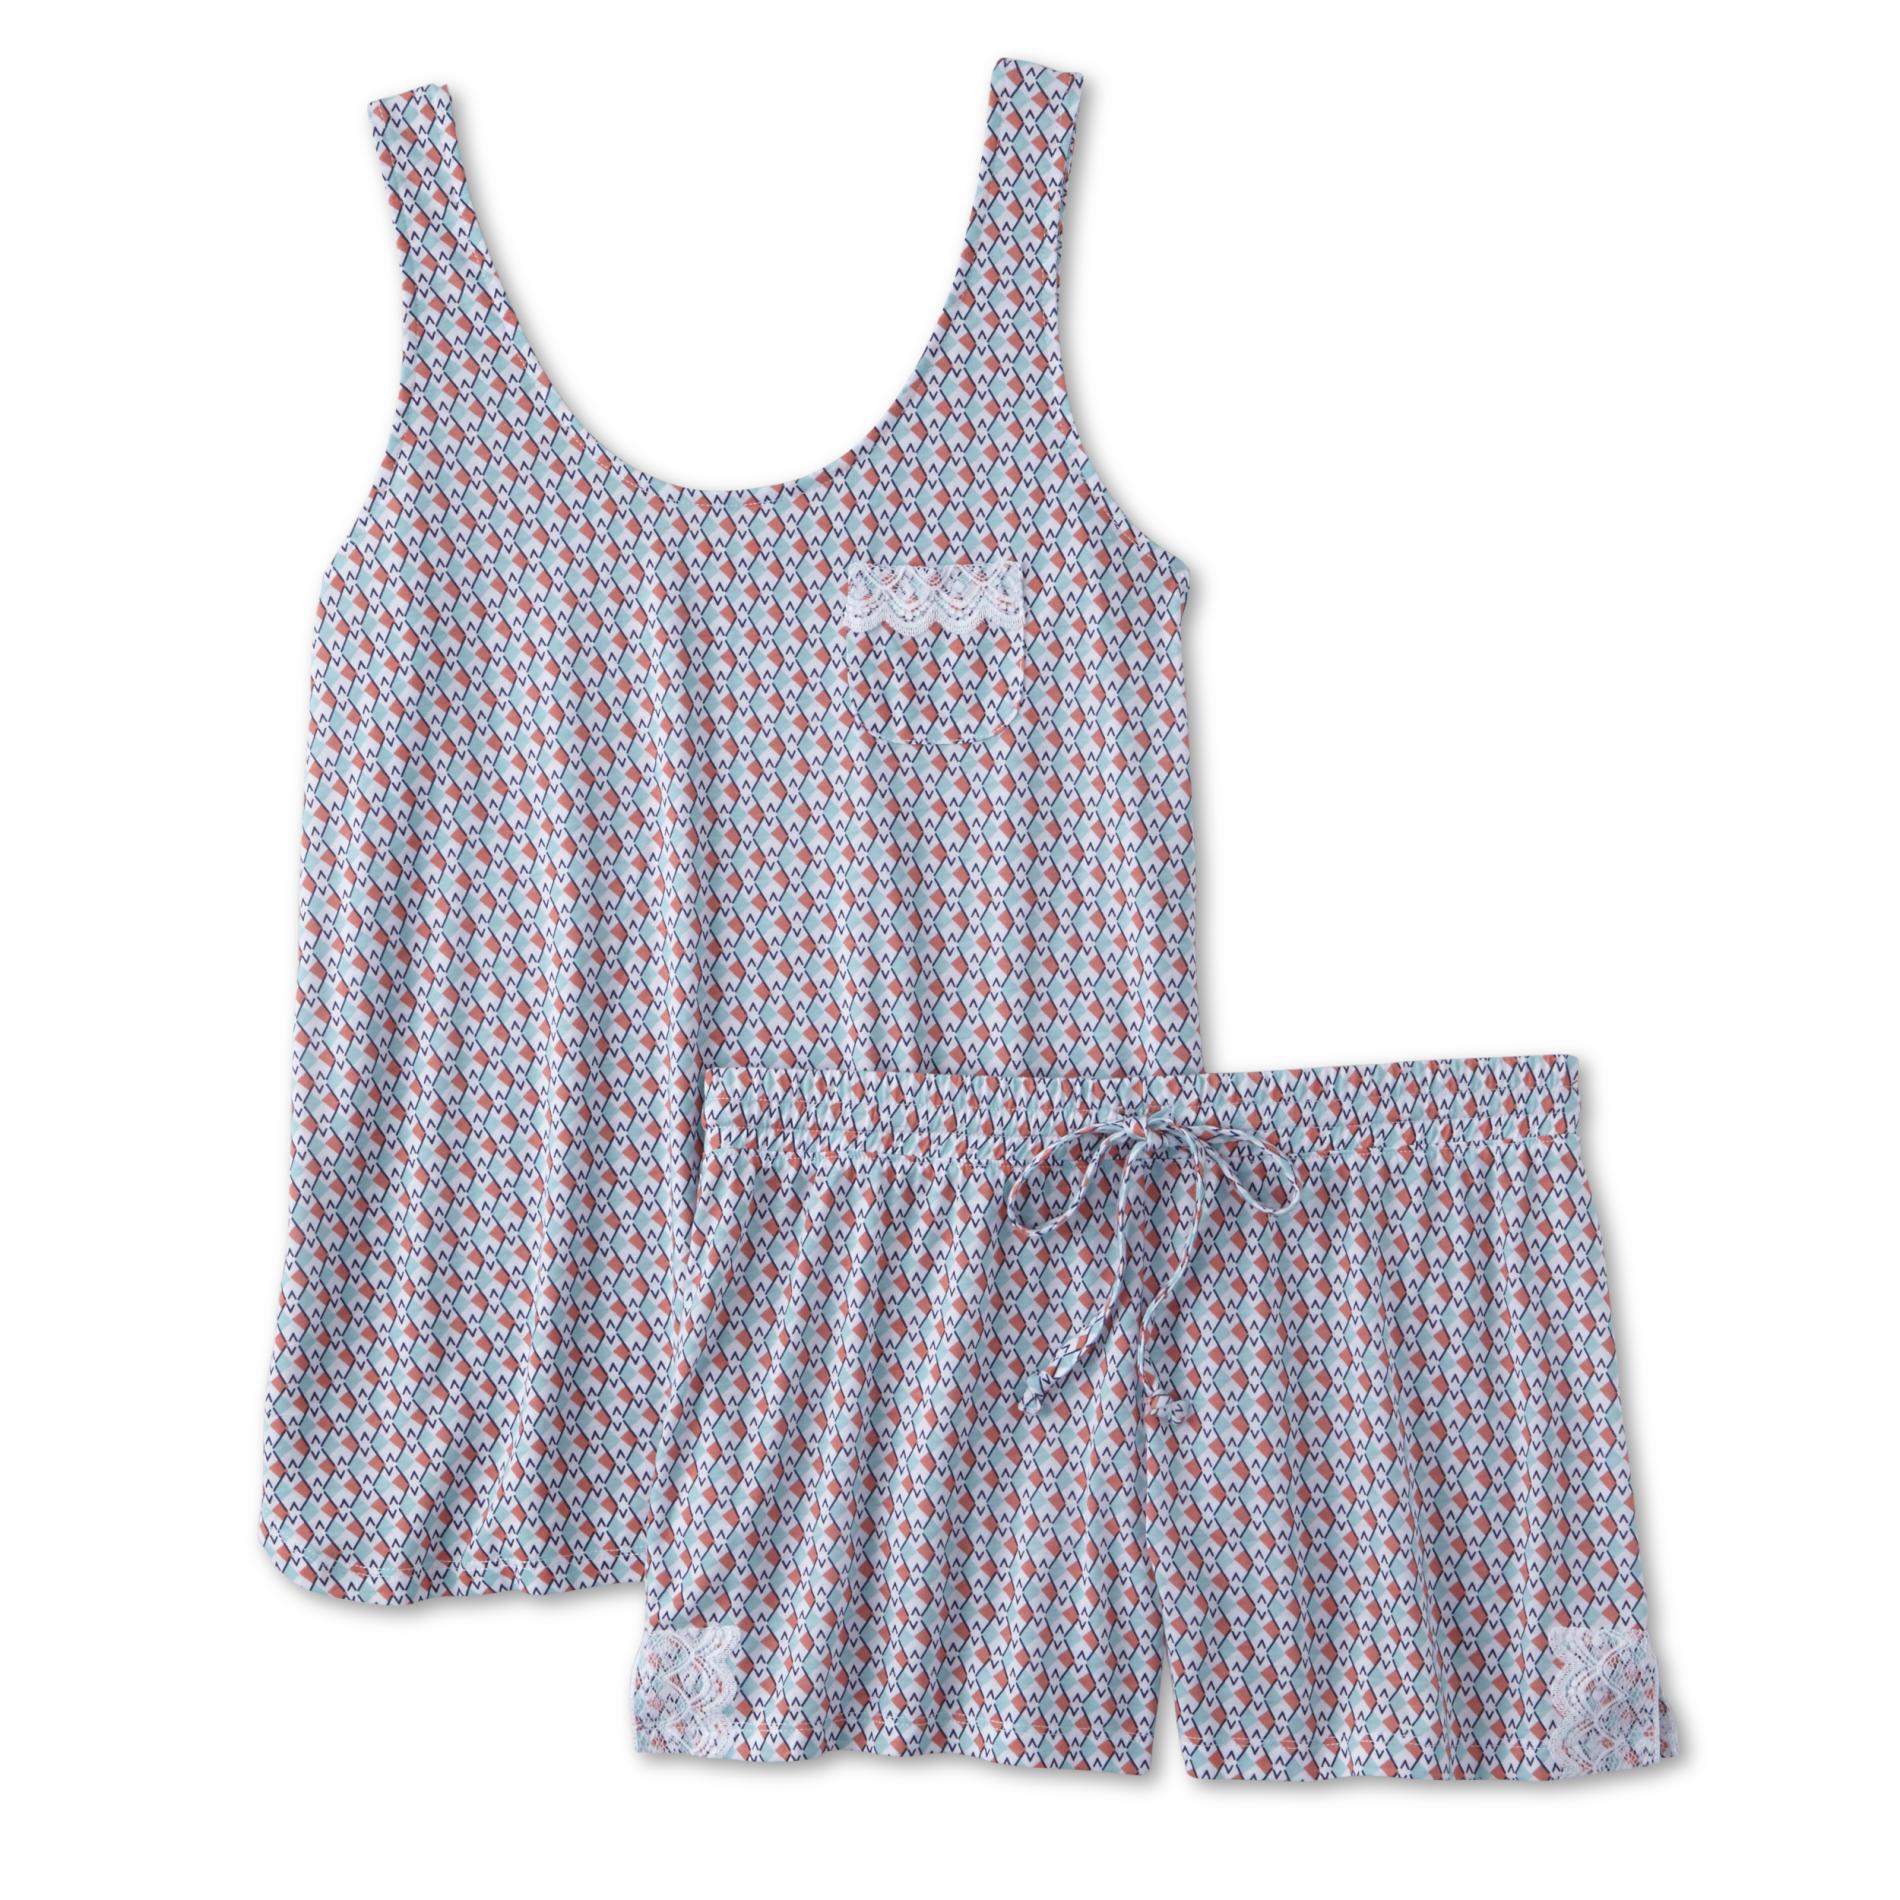 Simply Styled Women's Plus Pajama Tank Top & Shorts - Geometric